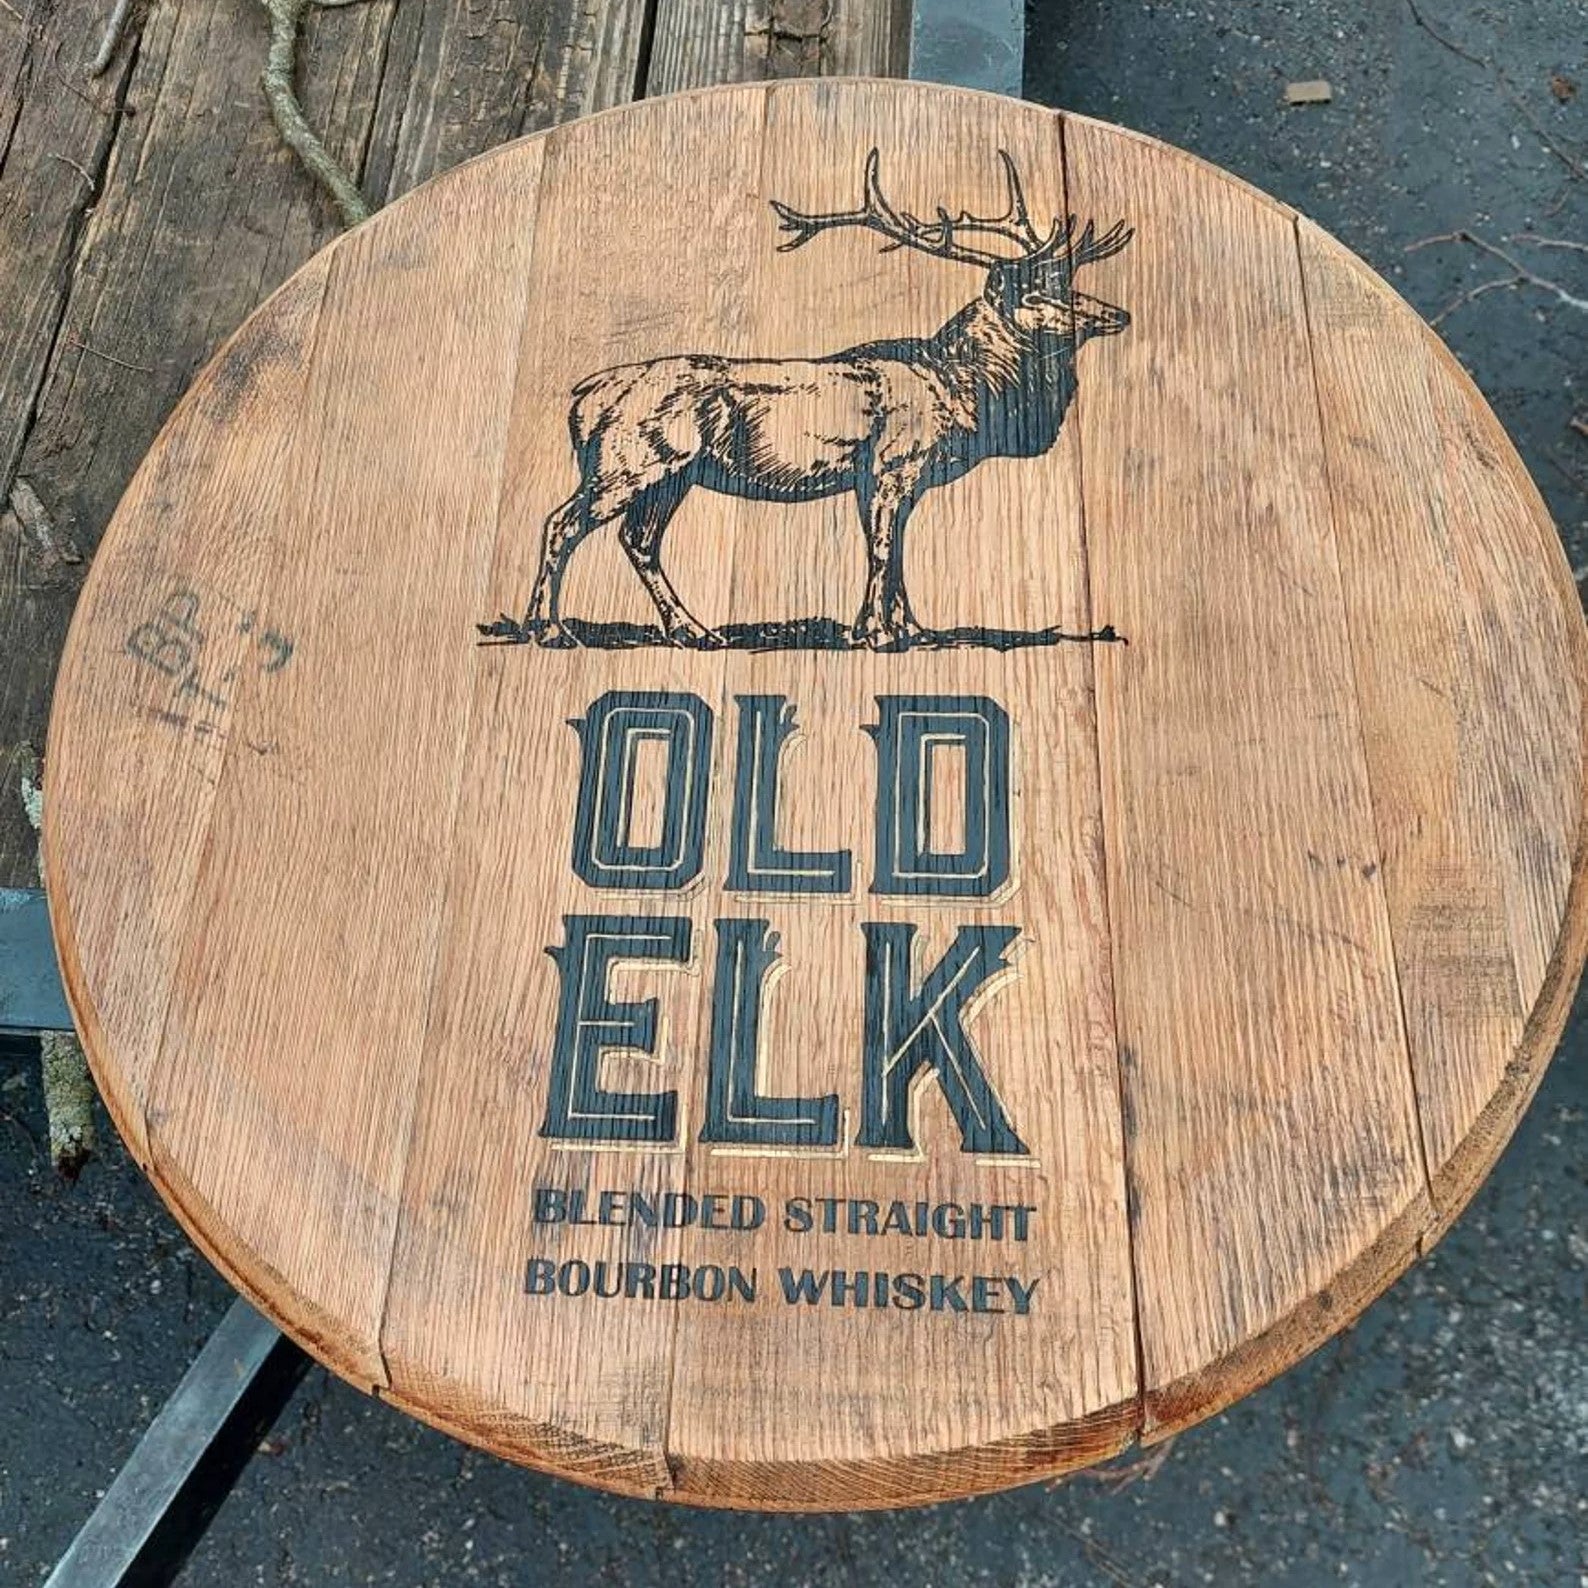 Old Elk Bourbon Barrel Top - Wall Hanging